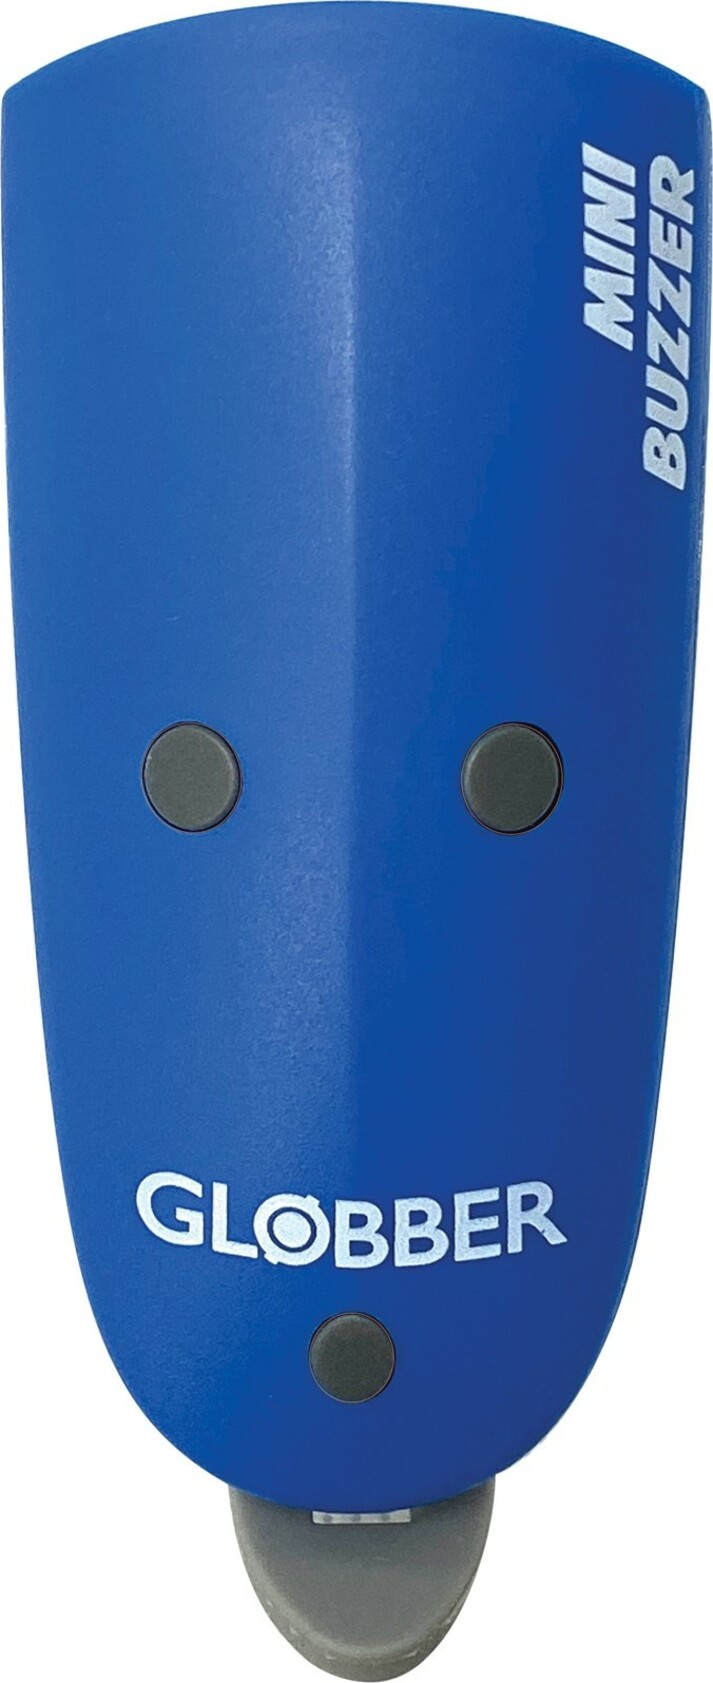 Globber Mini Buzzer Navy Blue